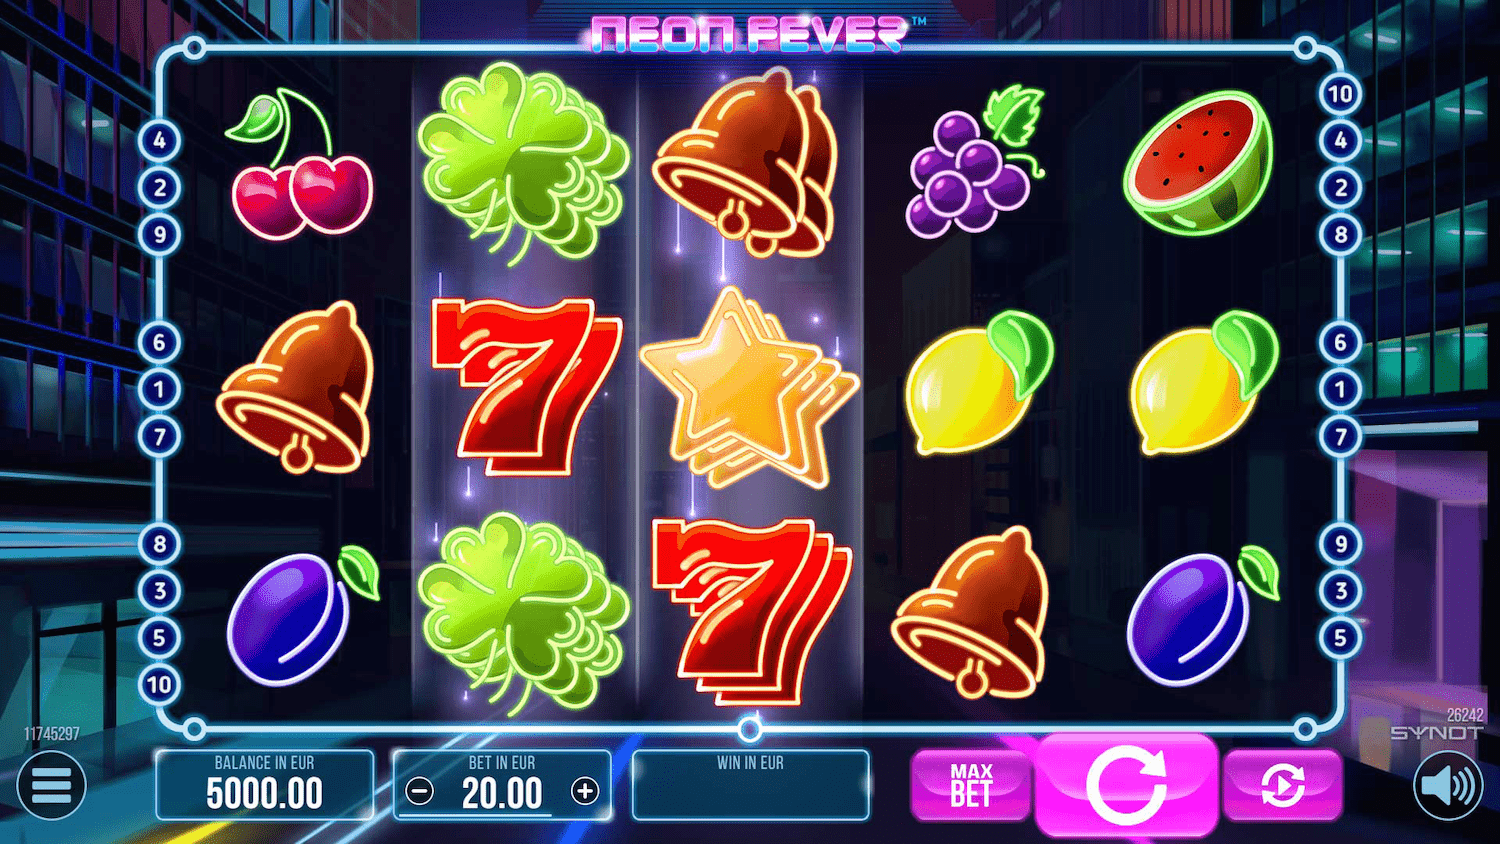 Slot Neon Fever oleh SYNOT Games - pratinjau gulungan